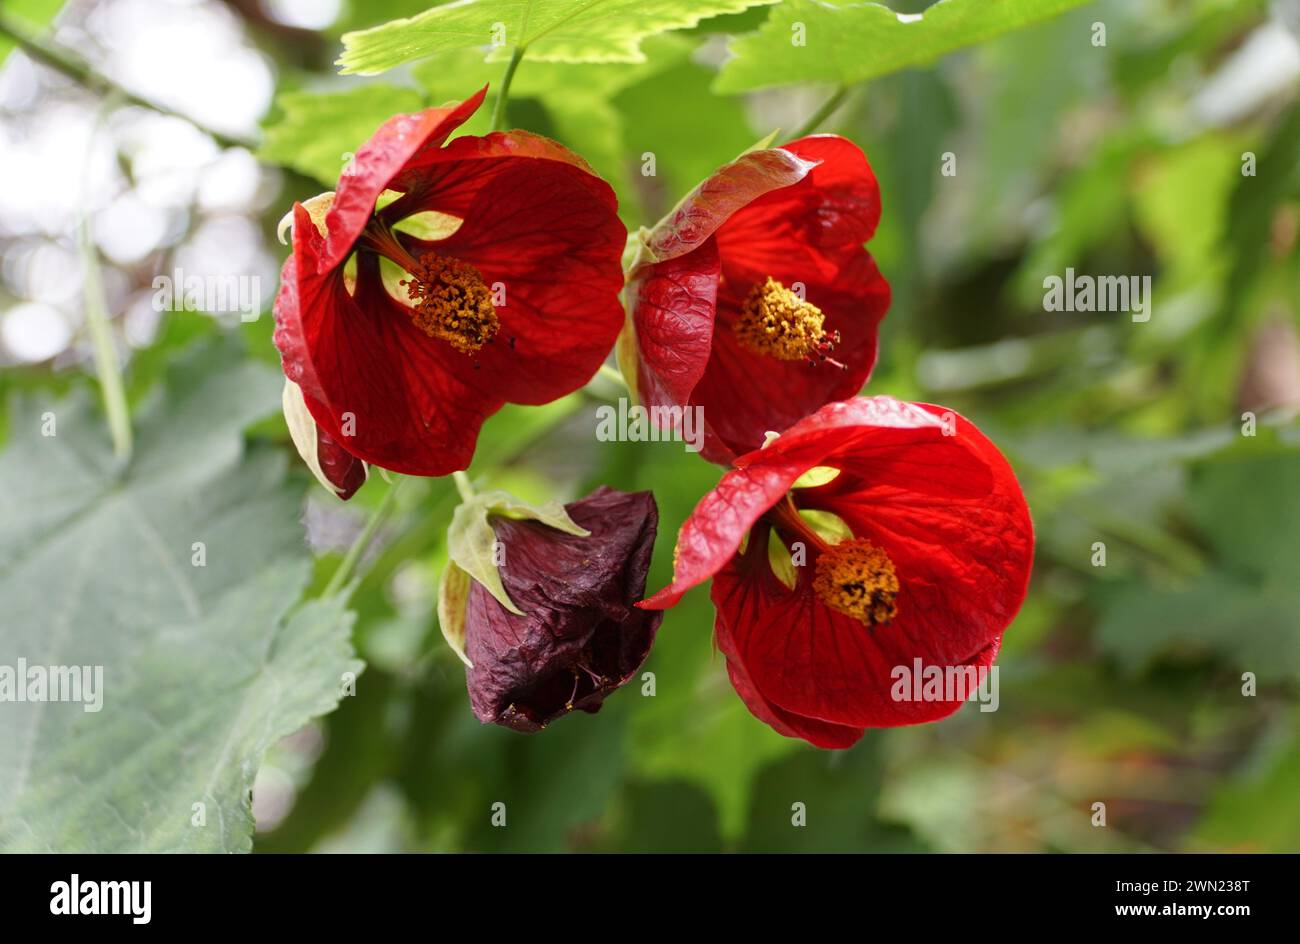 Bellissimo acero rosso "Voodoo" fiorito in piena fioritura Foto Stock